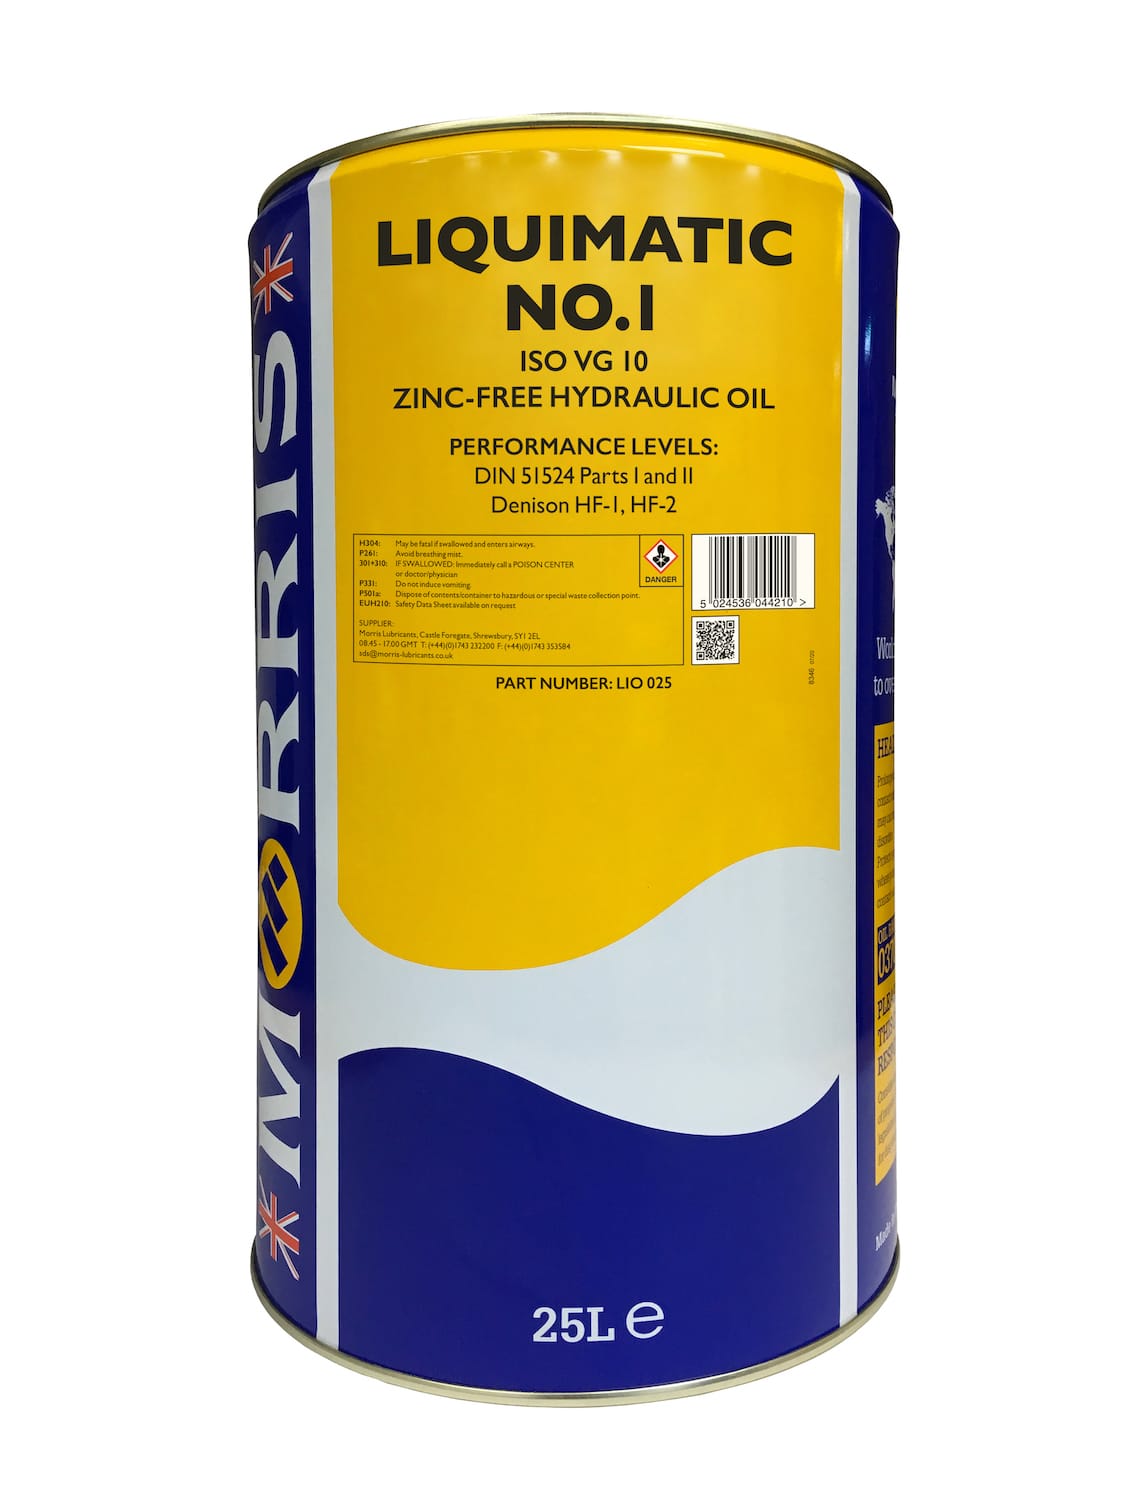 Liquimatic 1 (ISO 10)